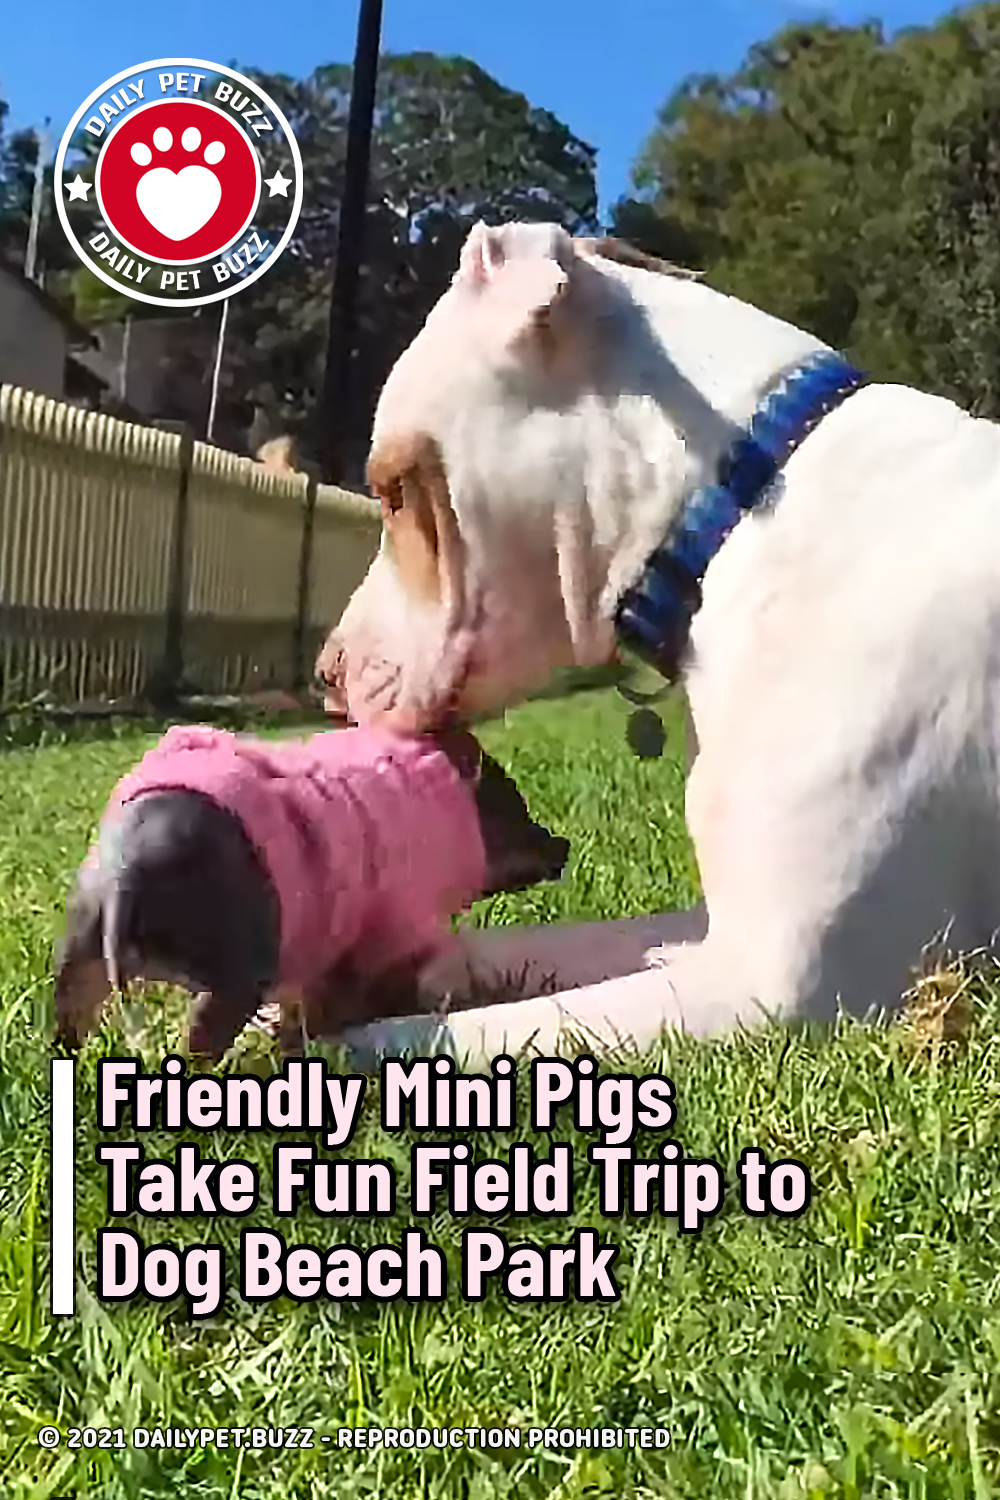 Friendly Mini Pigs Take Fun Field Trip to Dog Beach Park